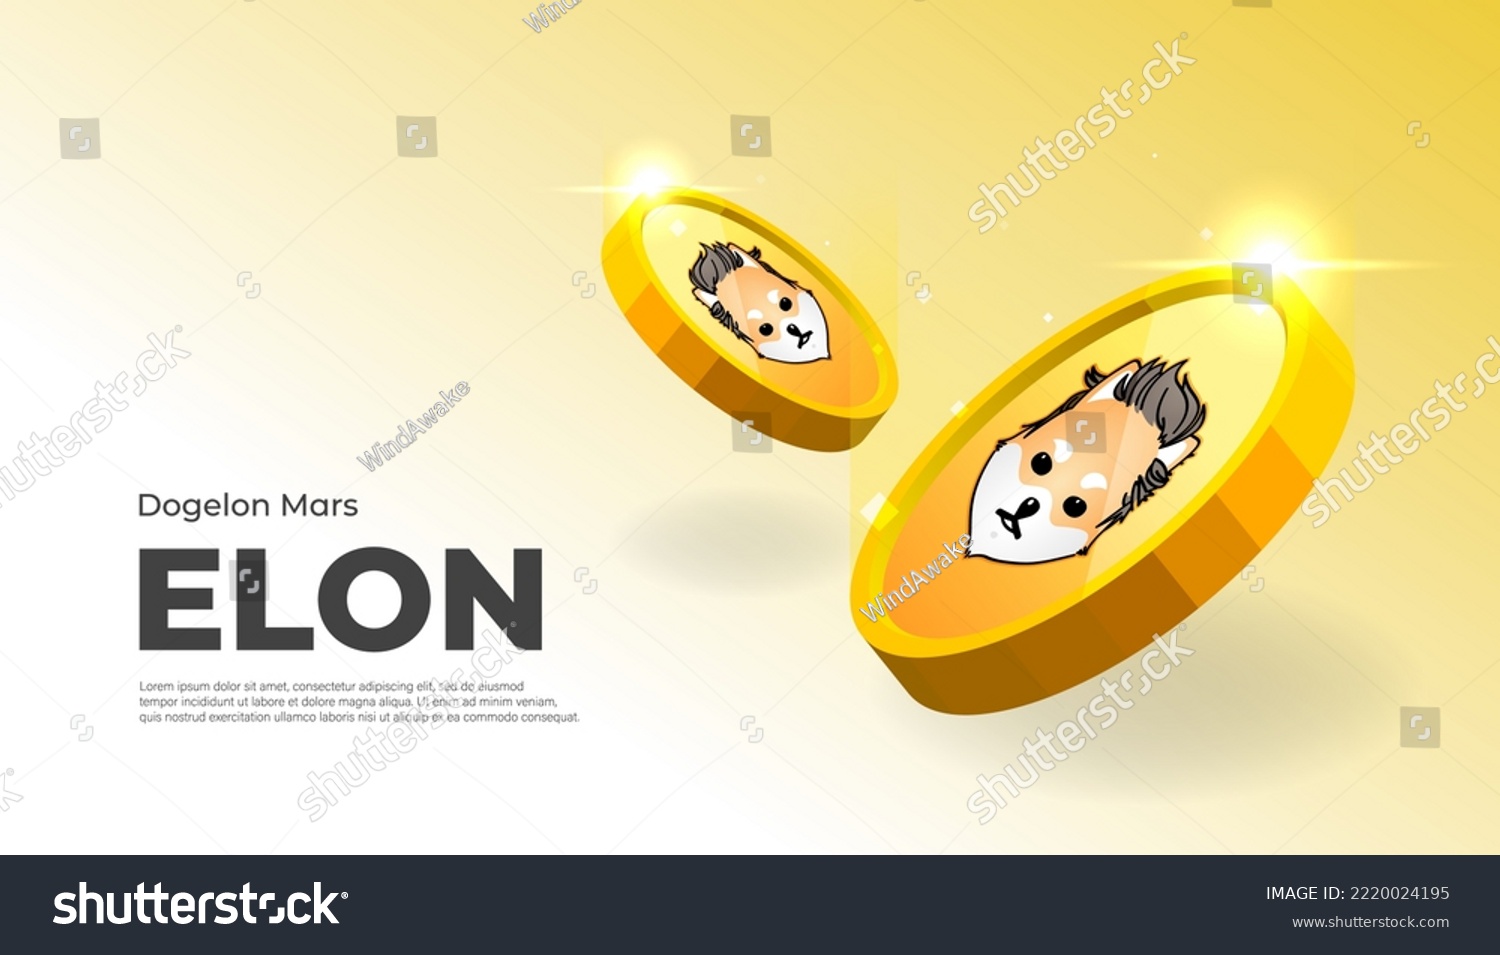 SVG of Dogelon Mars (ELON) coin cryptocurrency concept banner background. svg